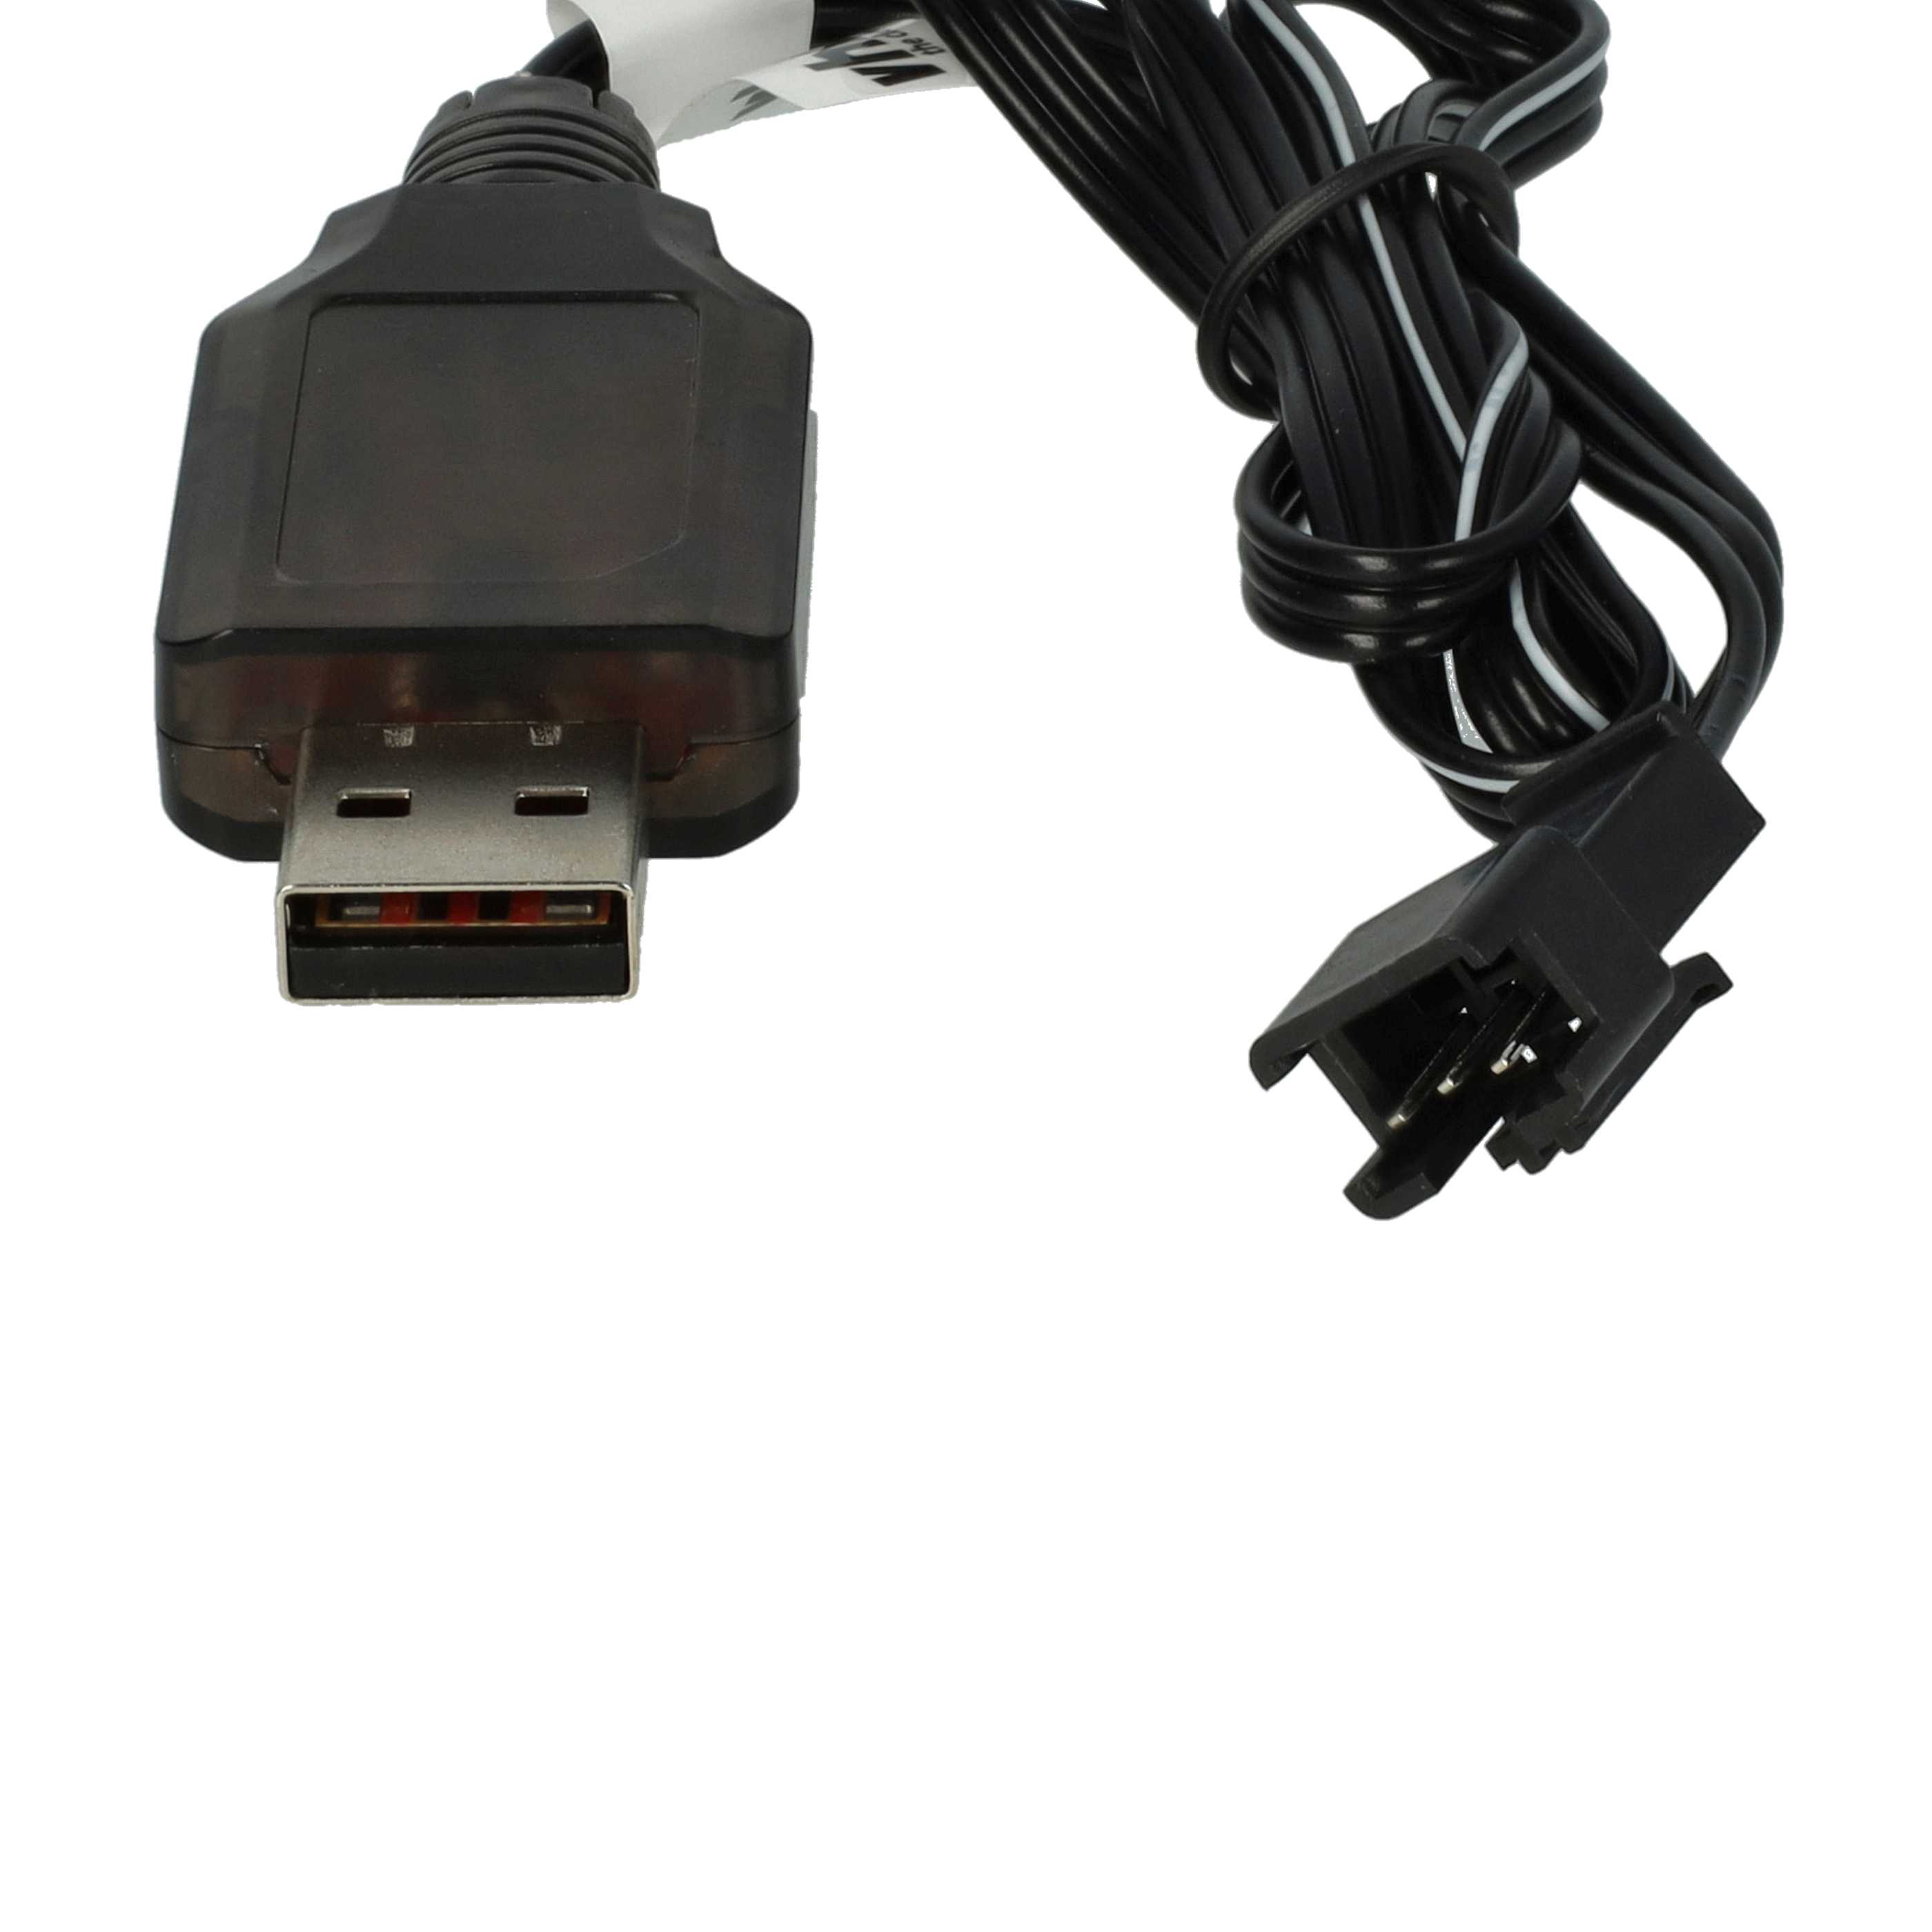 USB-Ladekabel passend für RC-Akkus mit SM-3P-Anschluss, RC-Modellbau Akkupacks - 60cm 6,4V